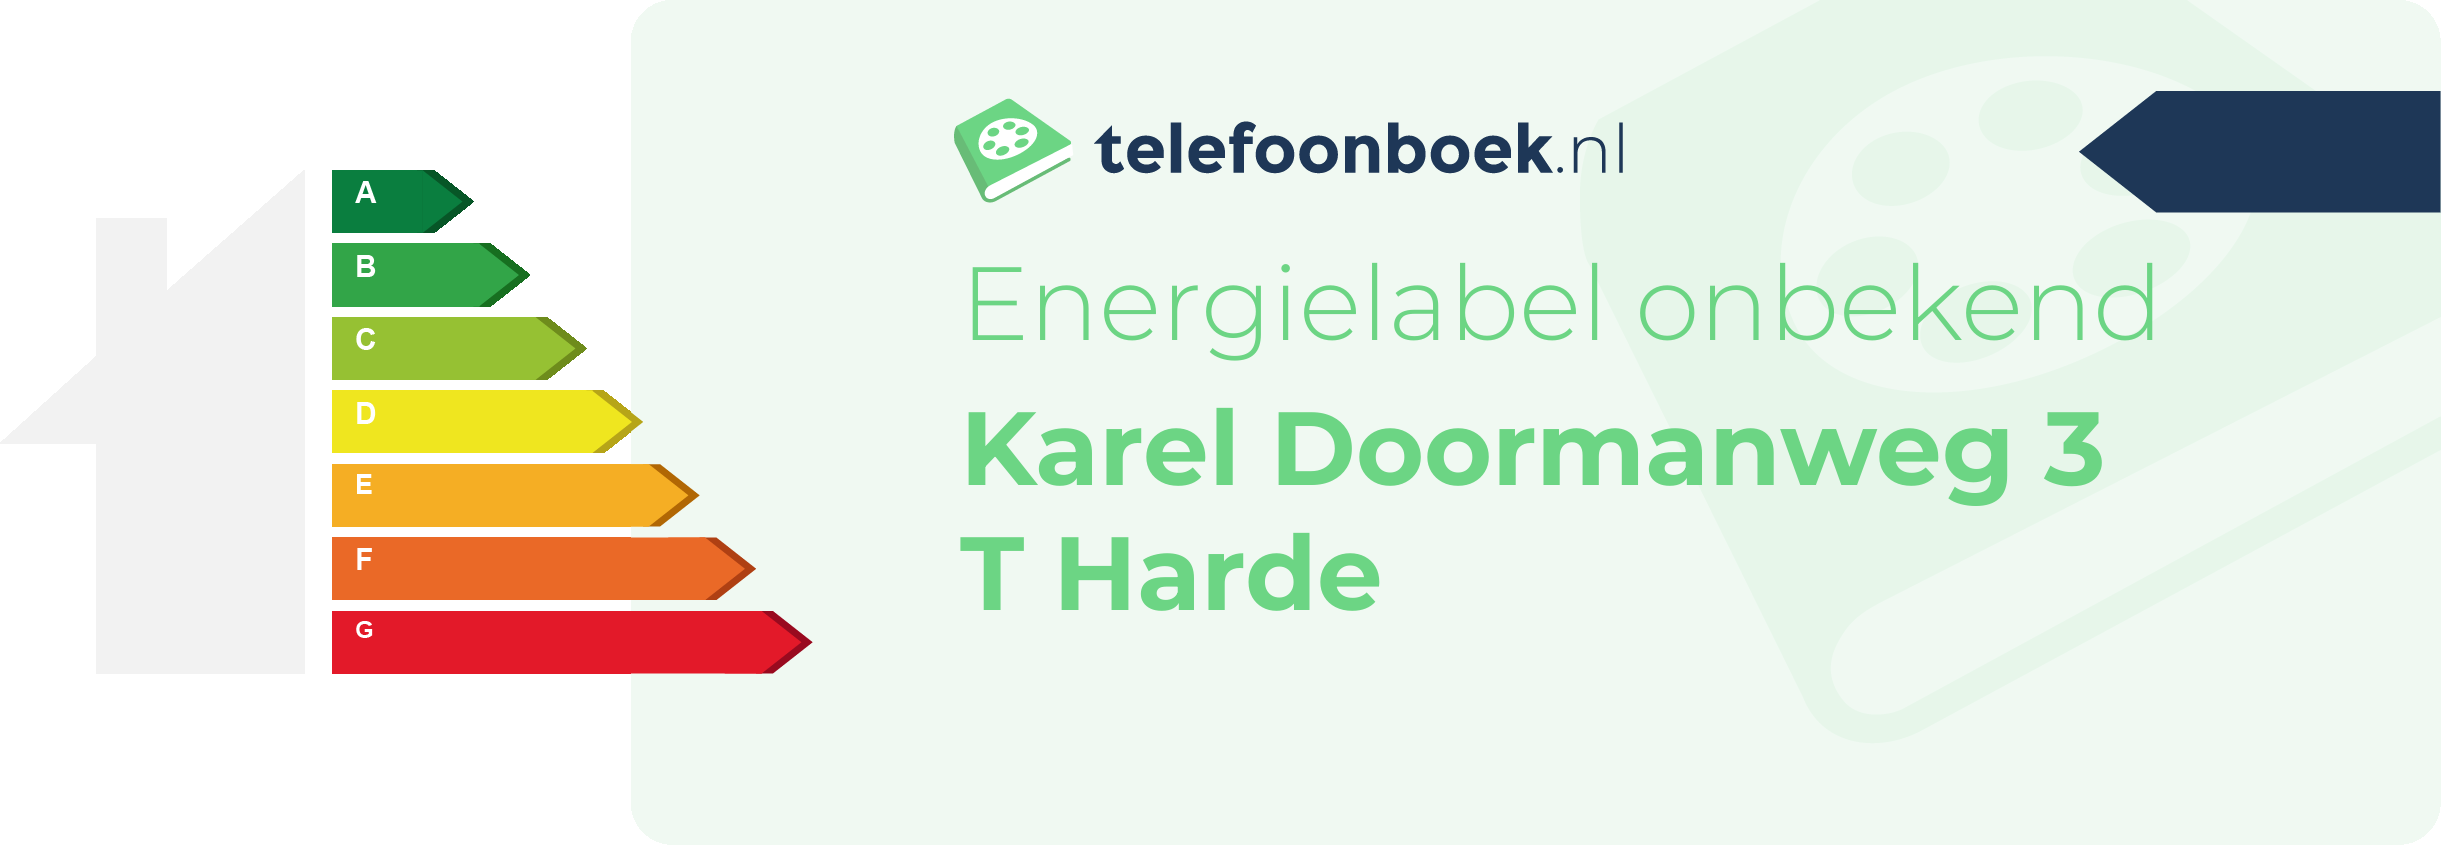 Energielabel Karel Doormanweg 3 T Harde